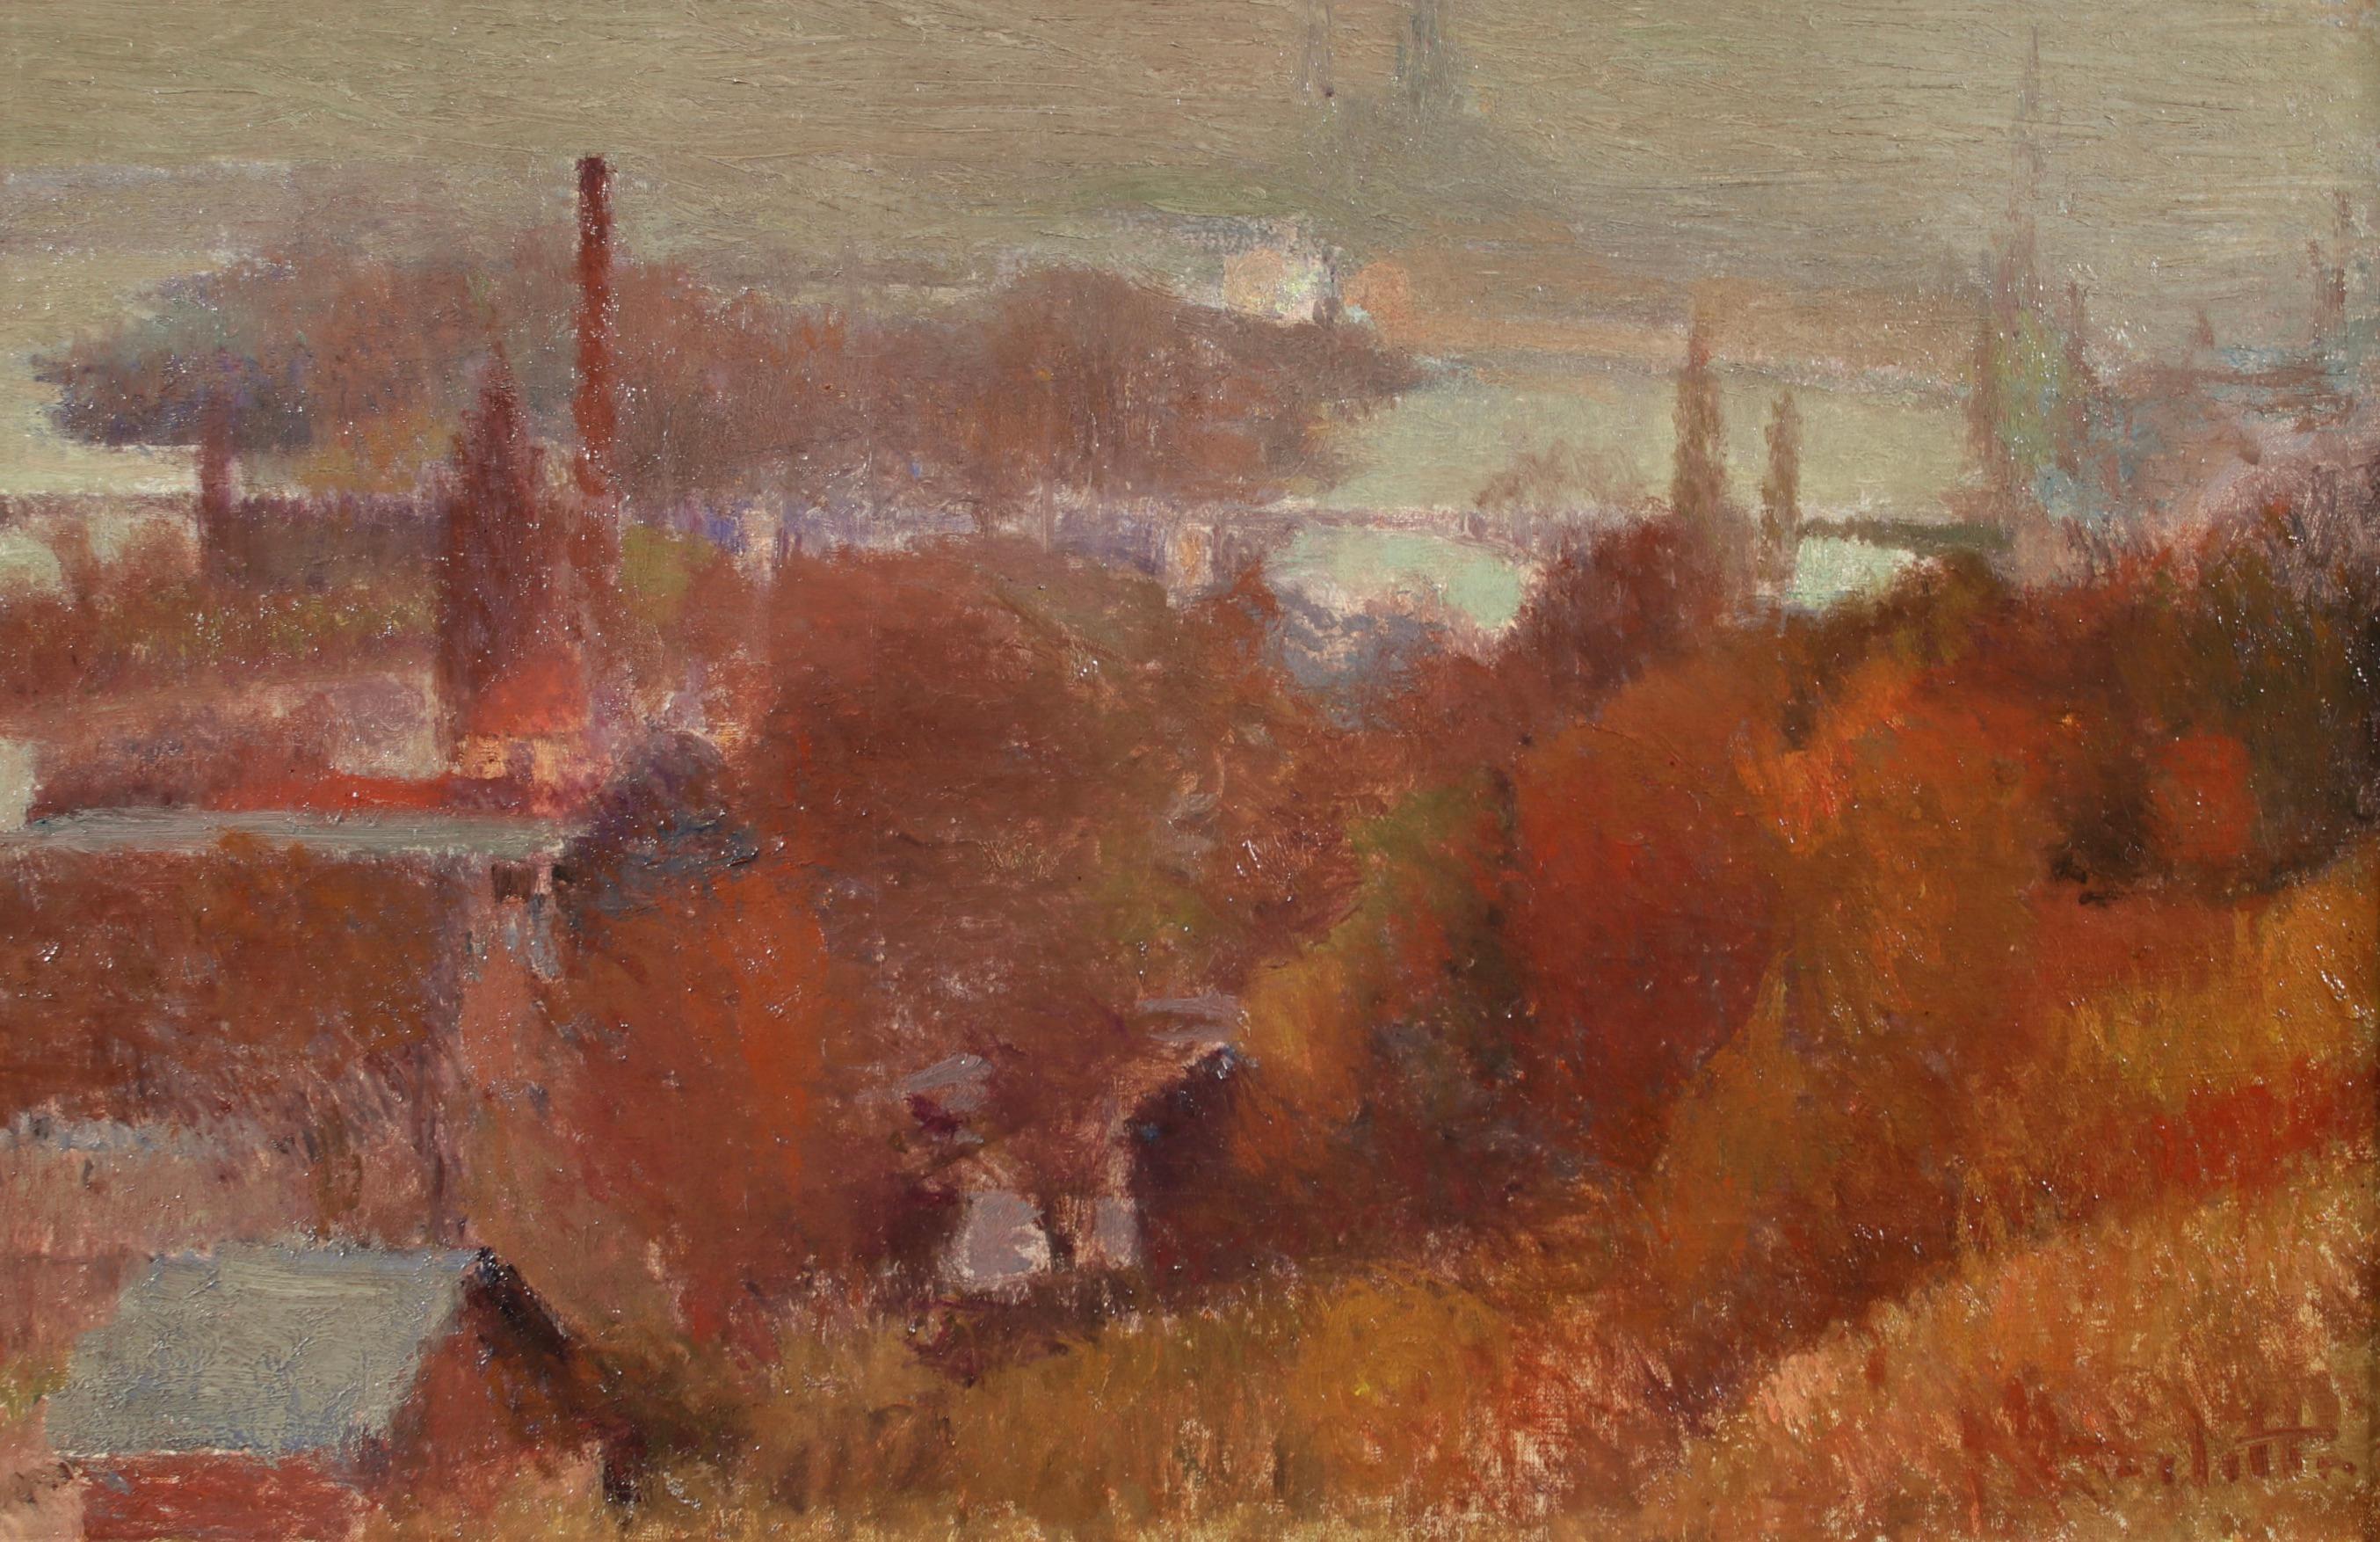 Morning Fog - Rouen - Impressionist Oil, River in Landscape by Joseph Delattre 6